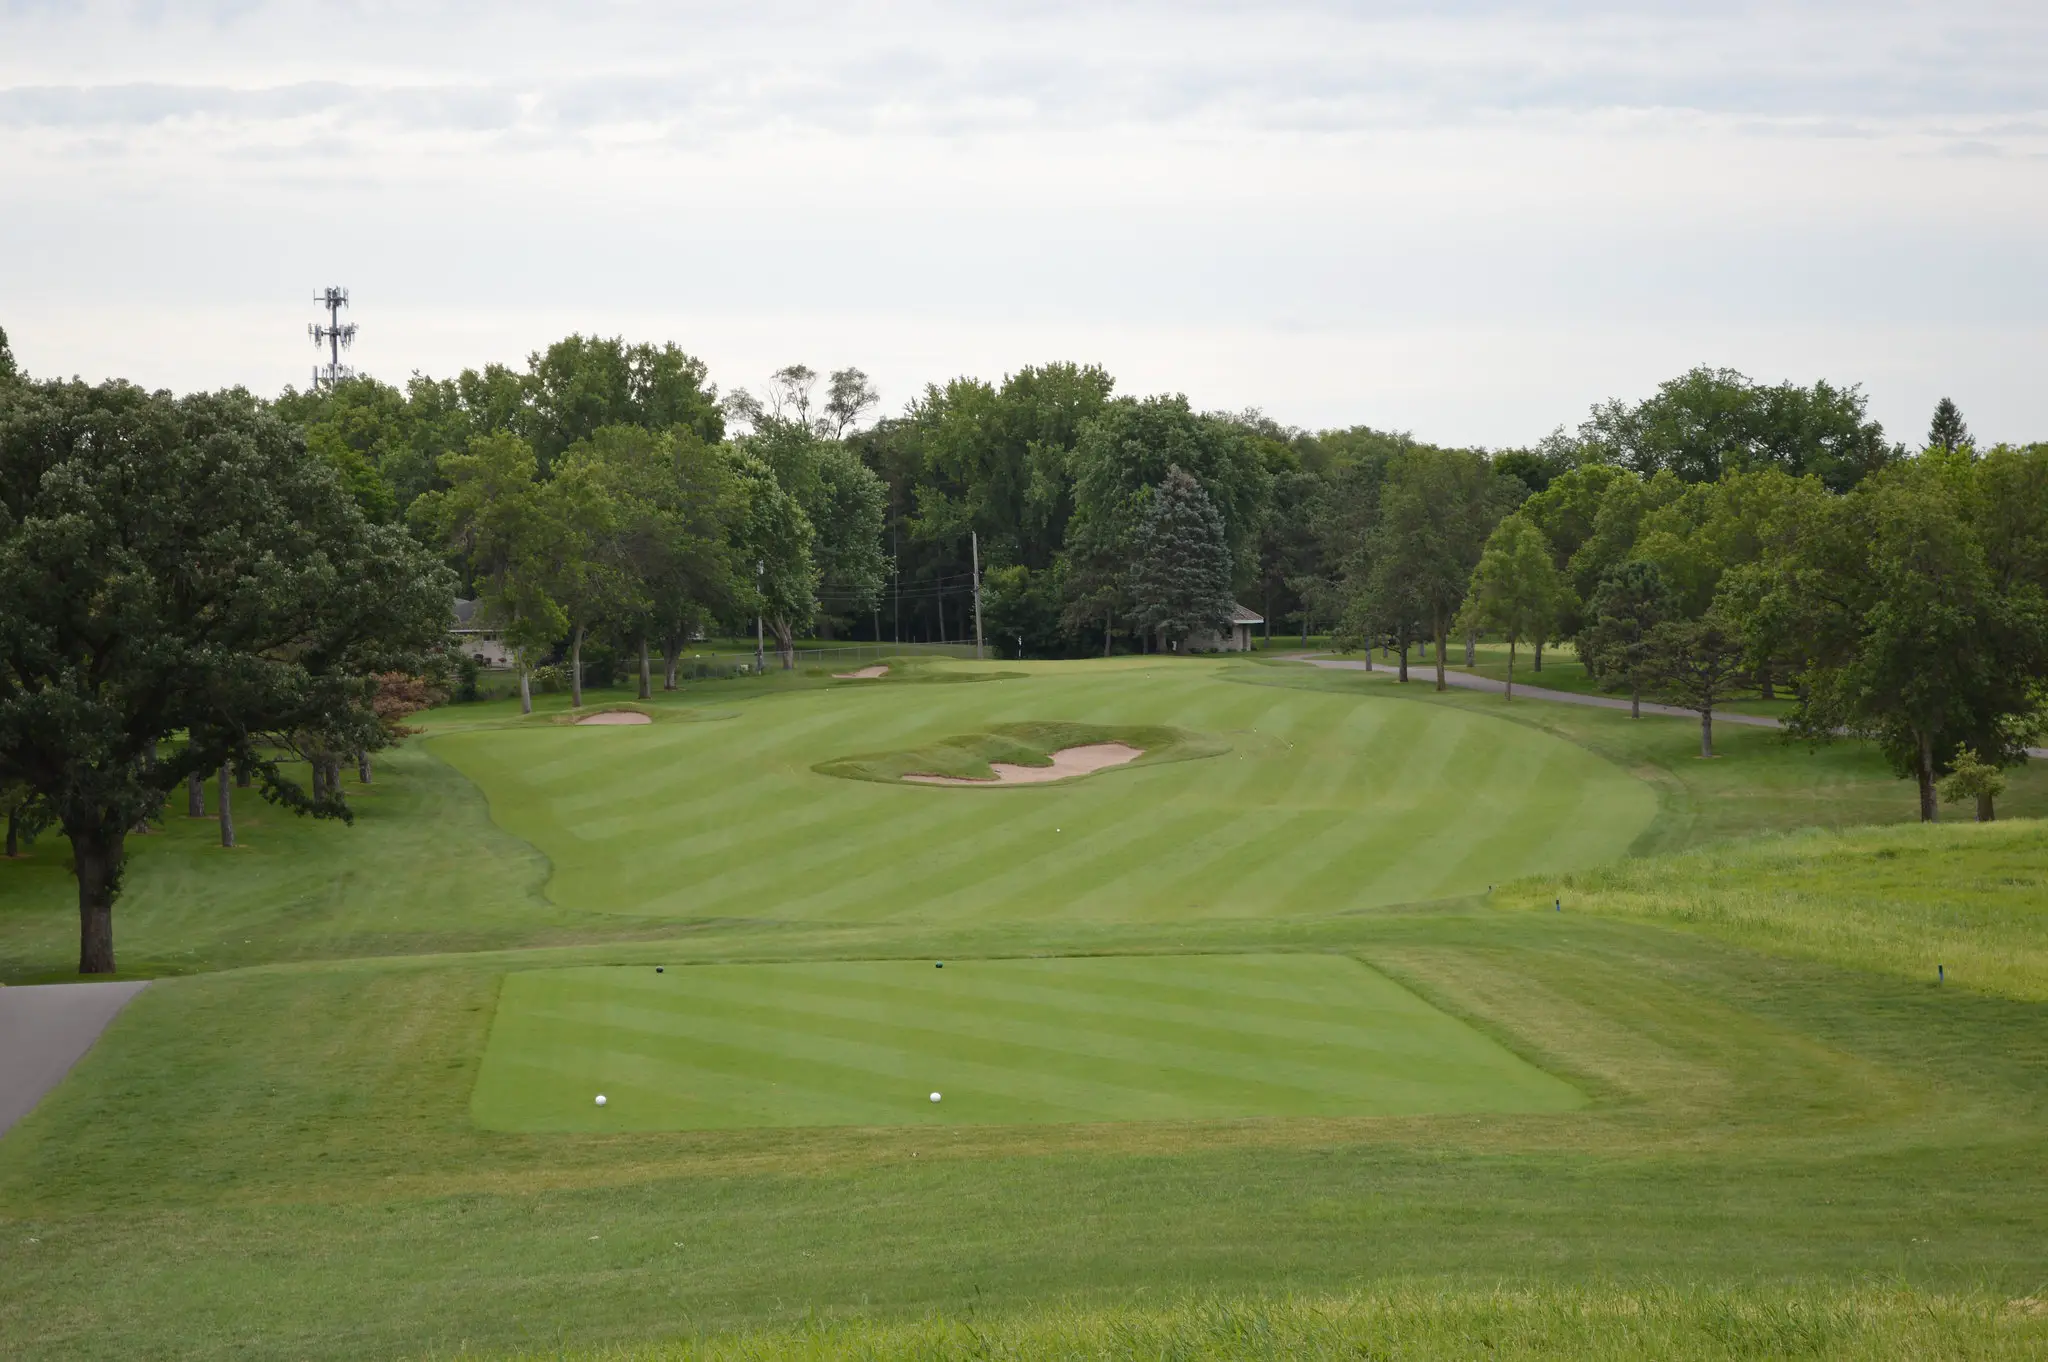 Best Golf Courses in Minnesota